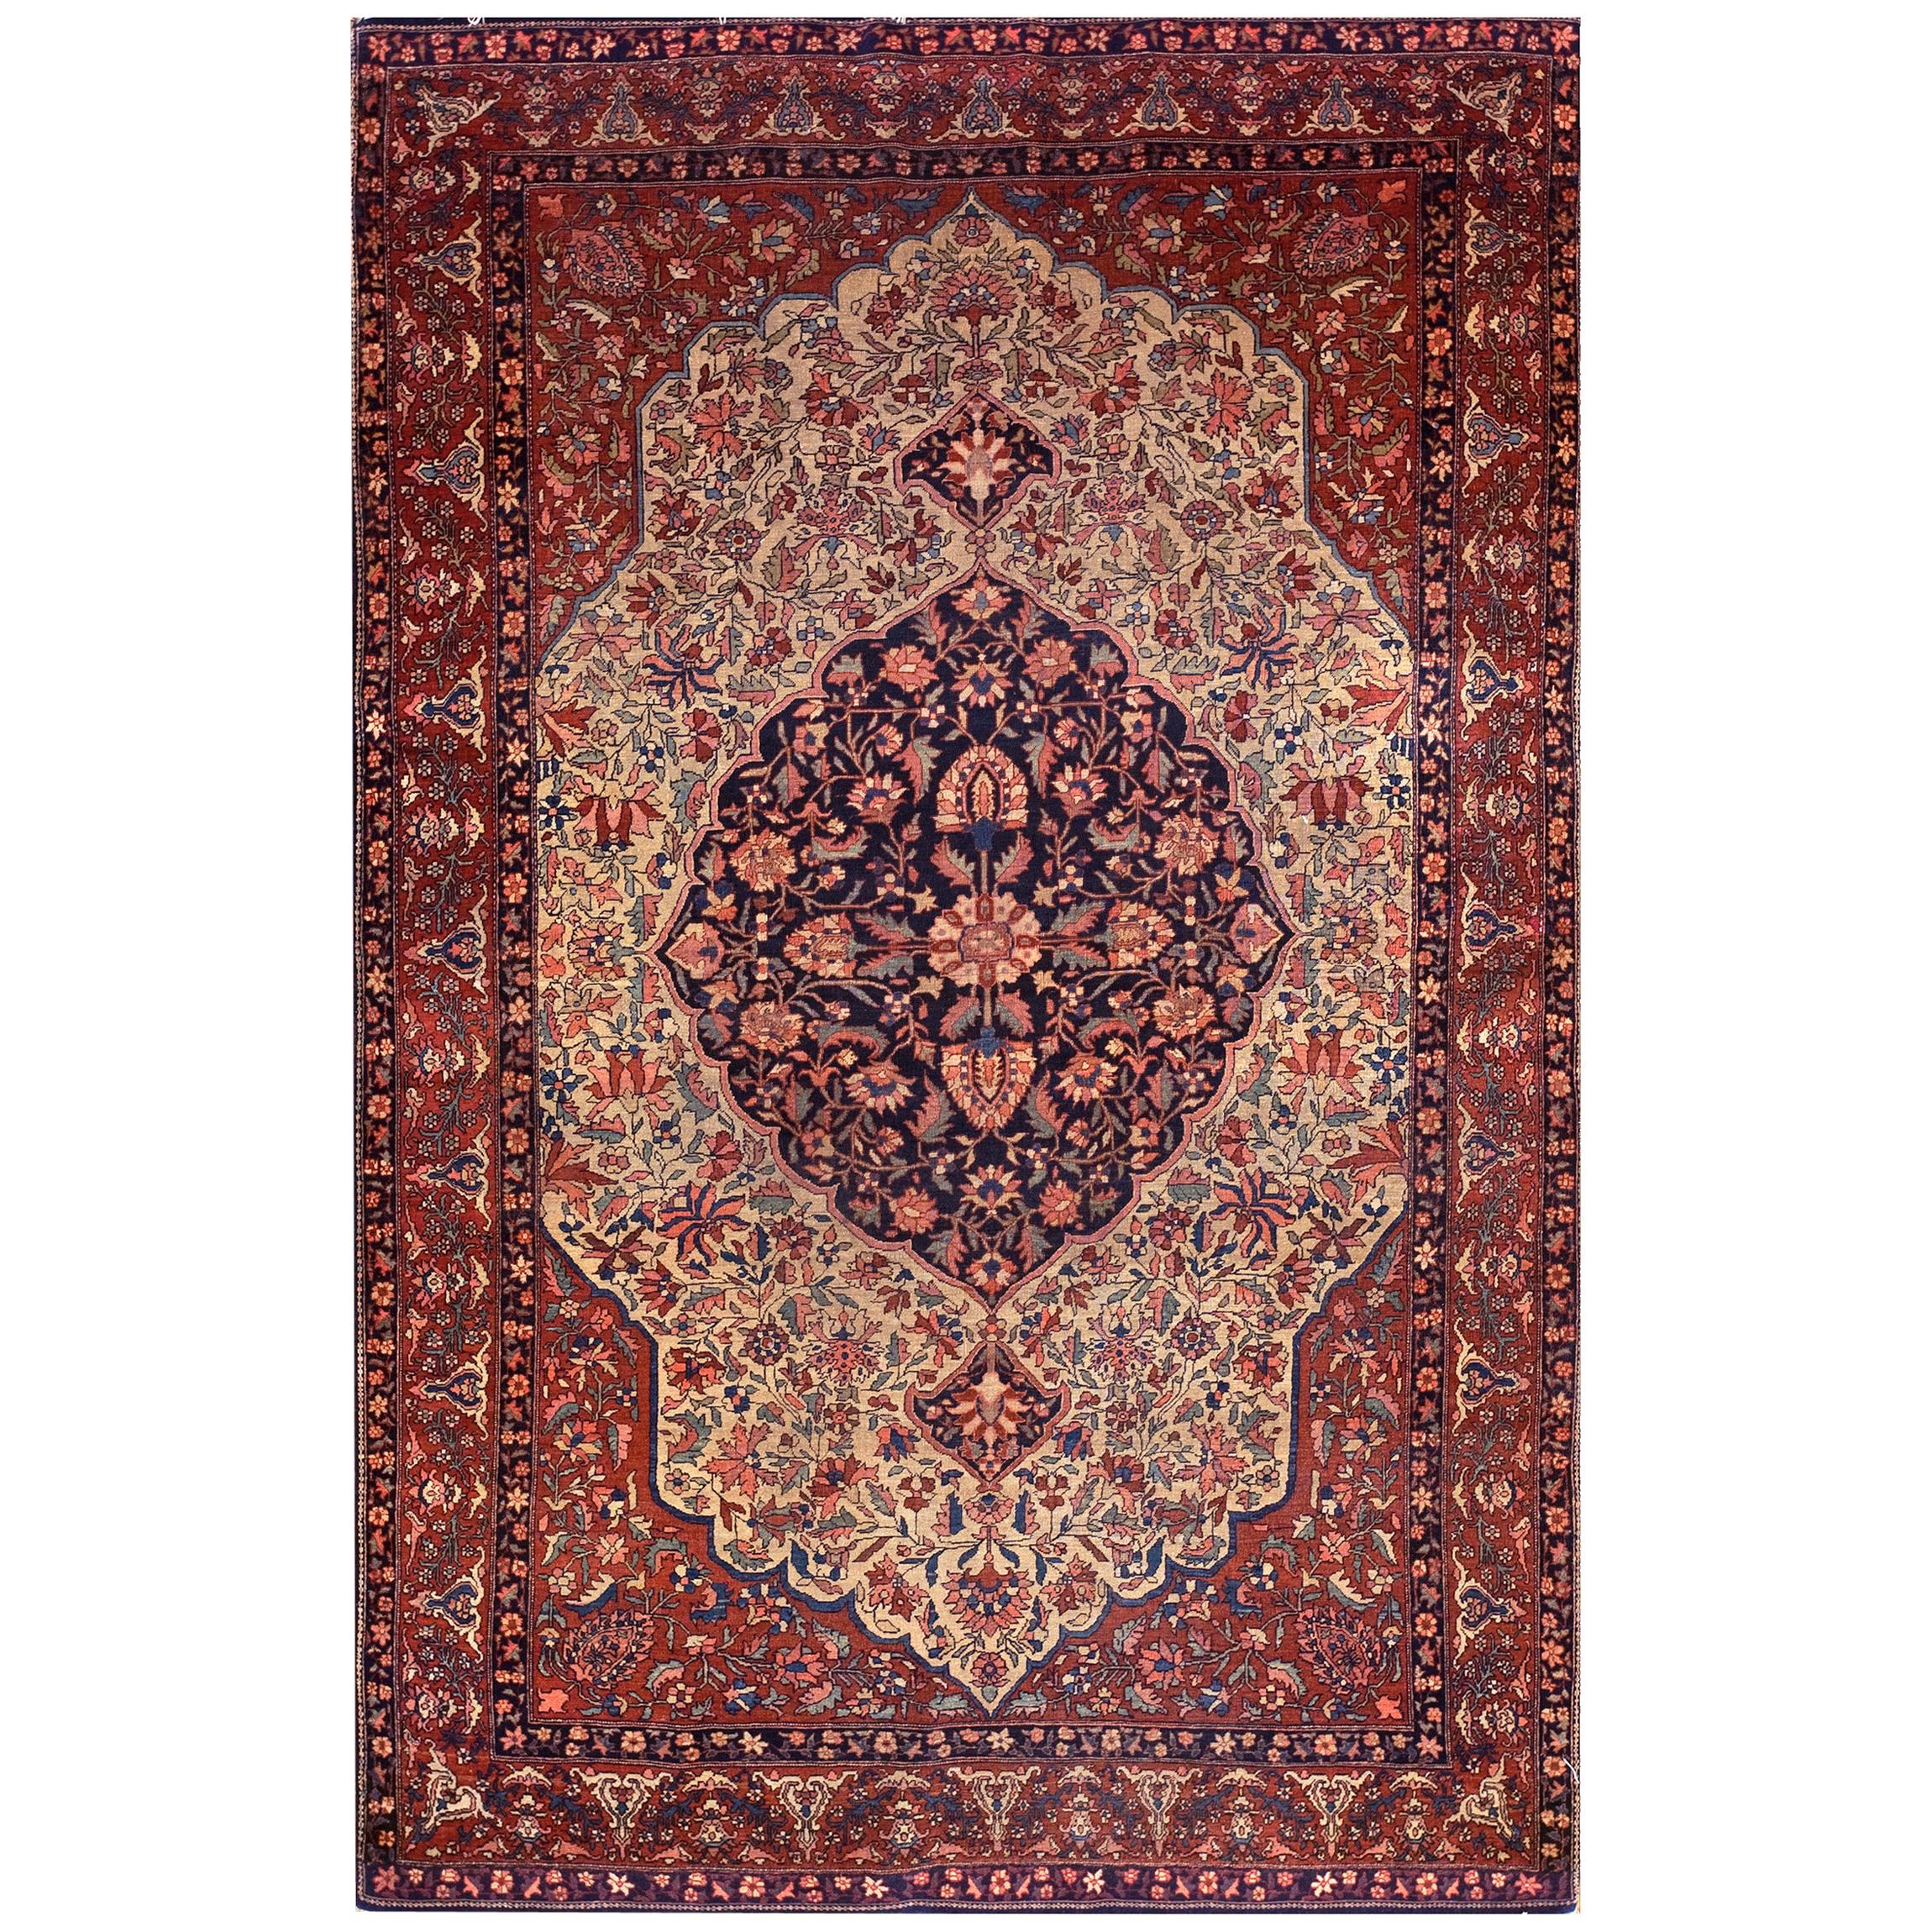 Early 20th Century Persian Sarouk Farahan Carpet ( 4'5" x 6'10" x 135 x 208 ) For Sale